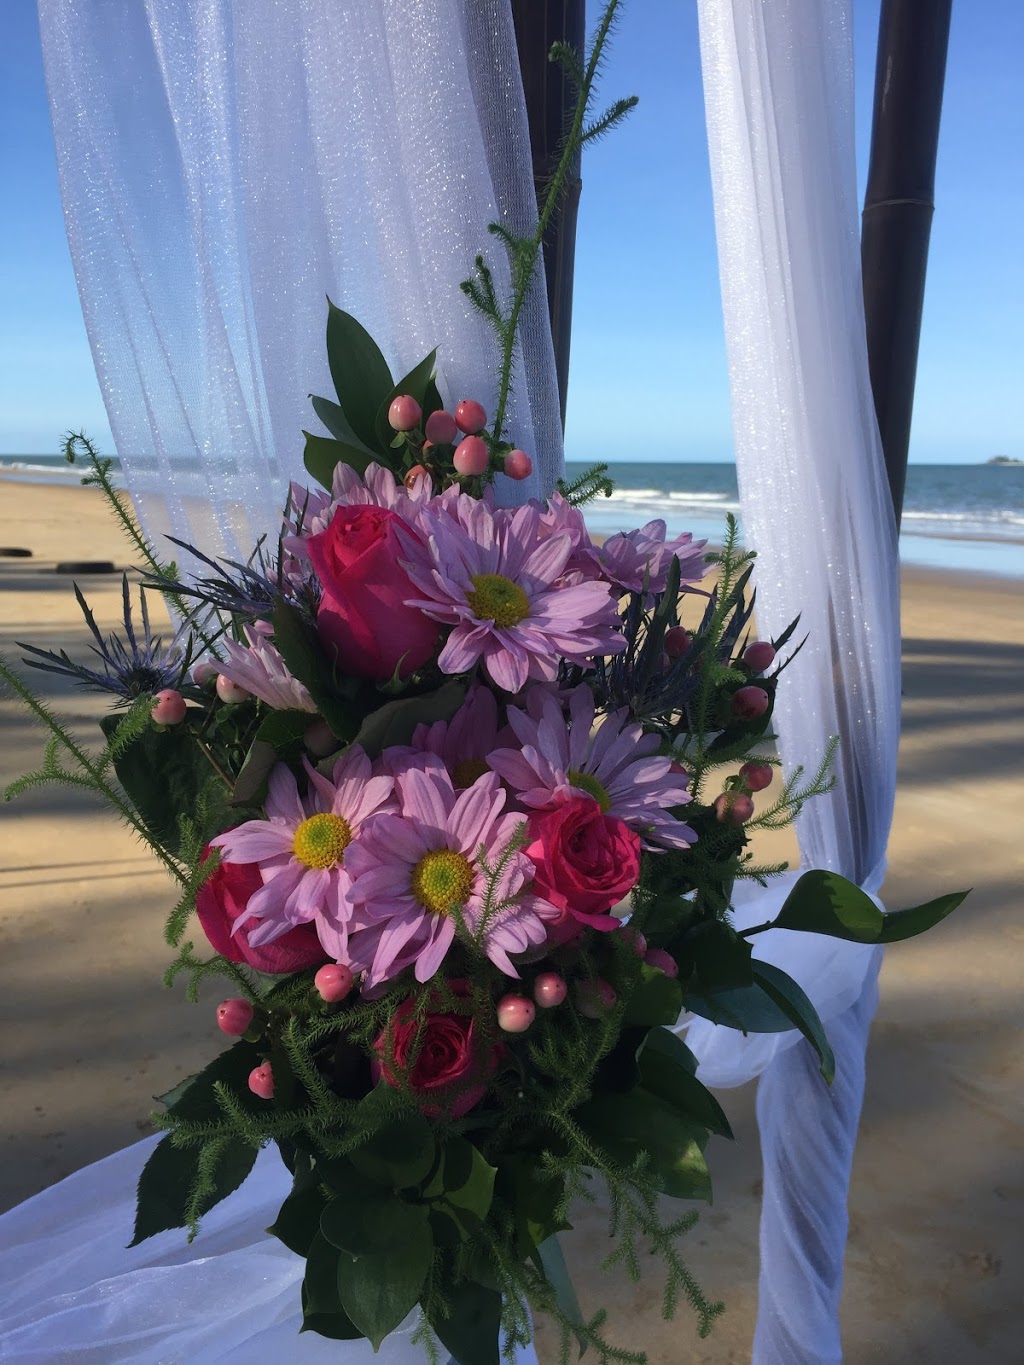 Mission Beach Weddings |  | 161 Reid Rd, Wongaling Beach QLD 4852, Australia | 0407350340 OR +61 407 350 340